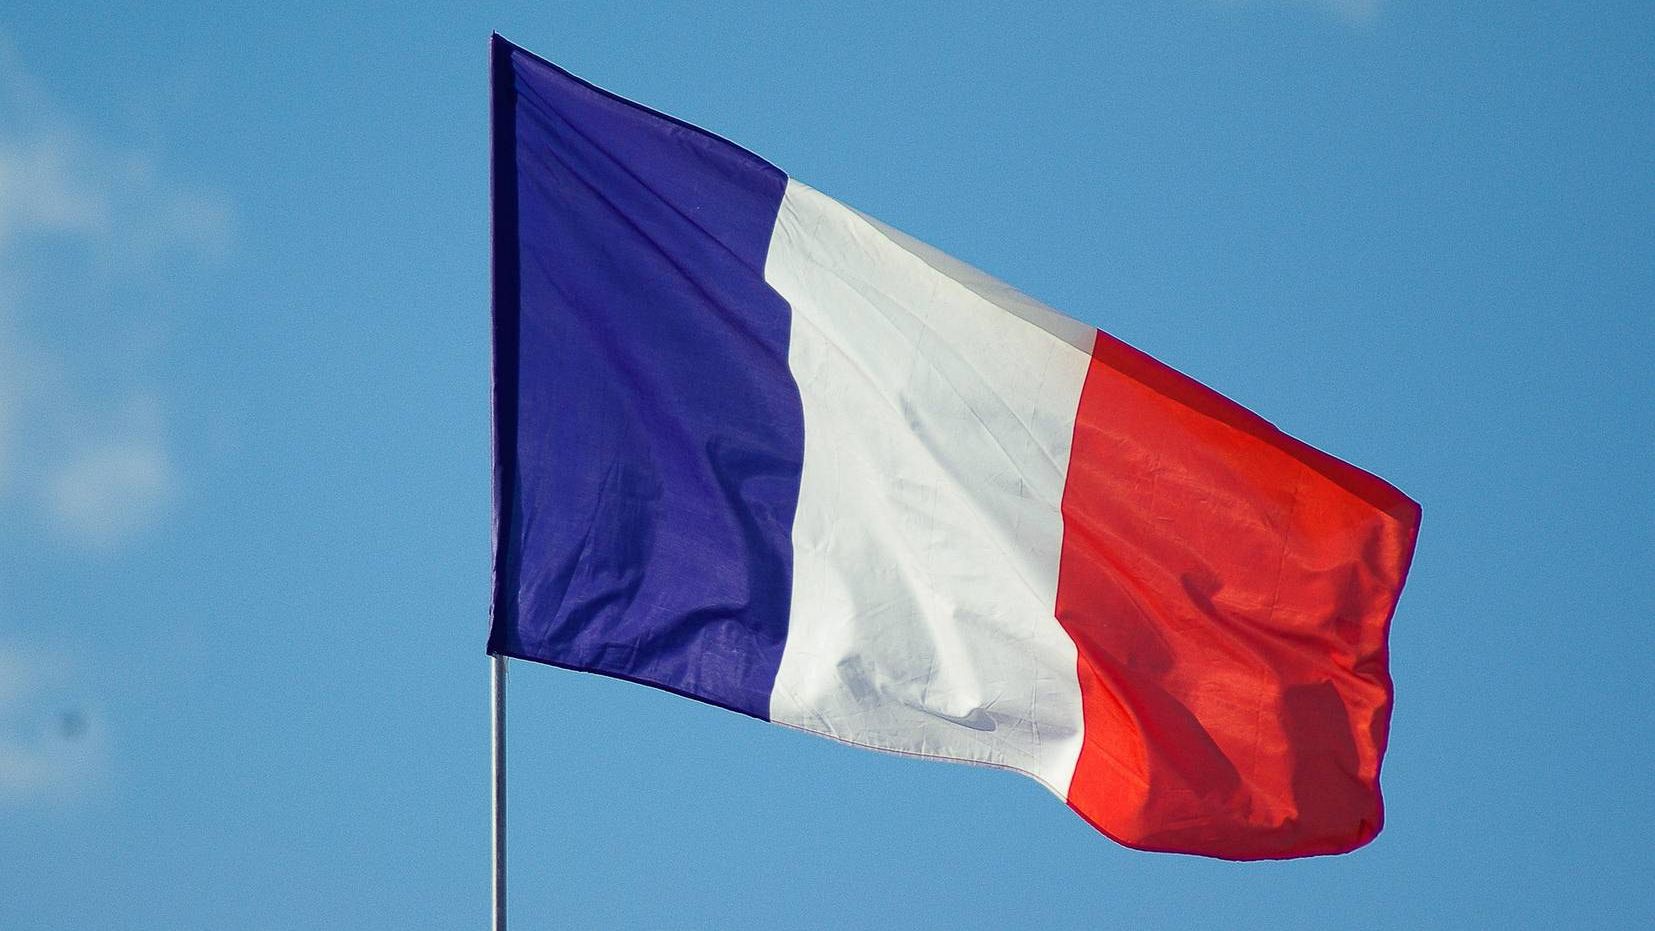 Франция. Государственный флаг